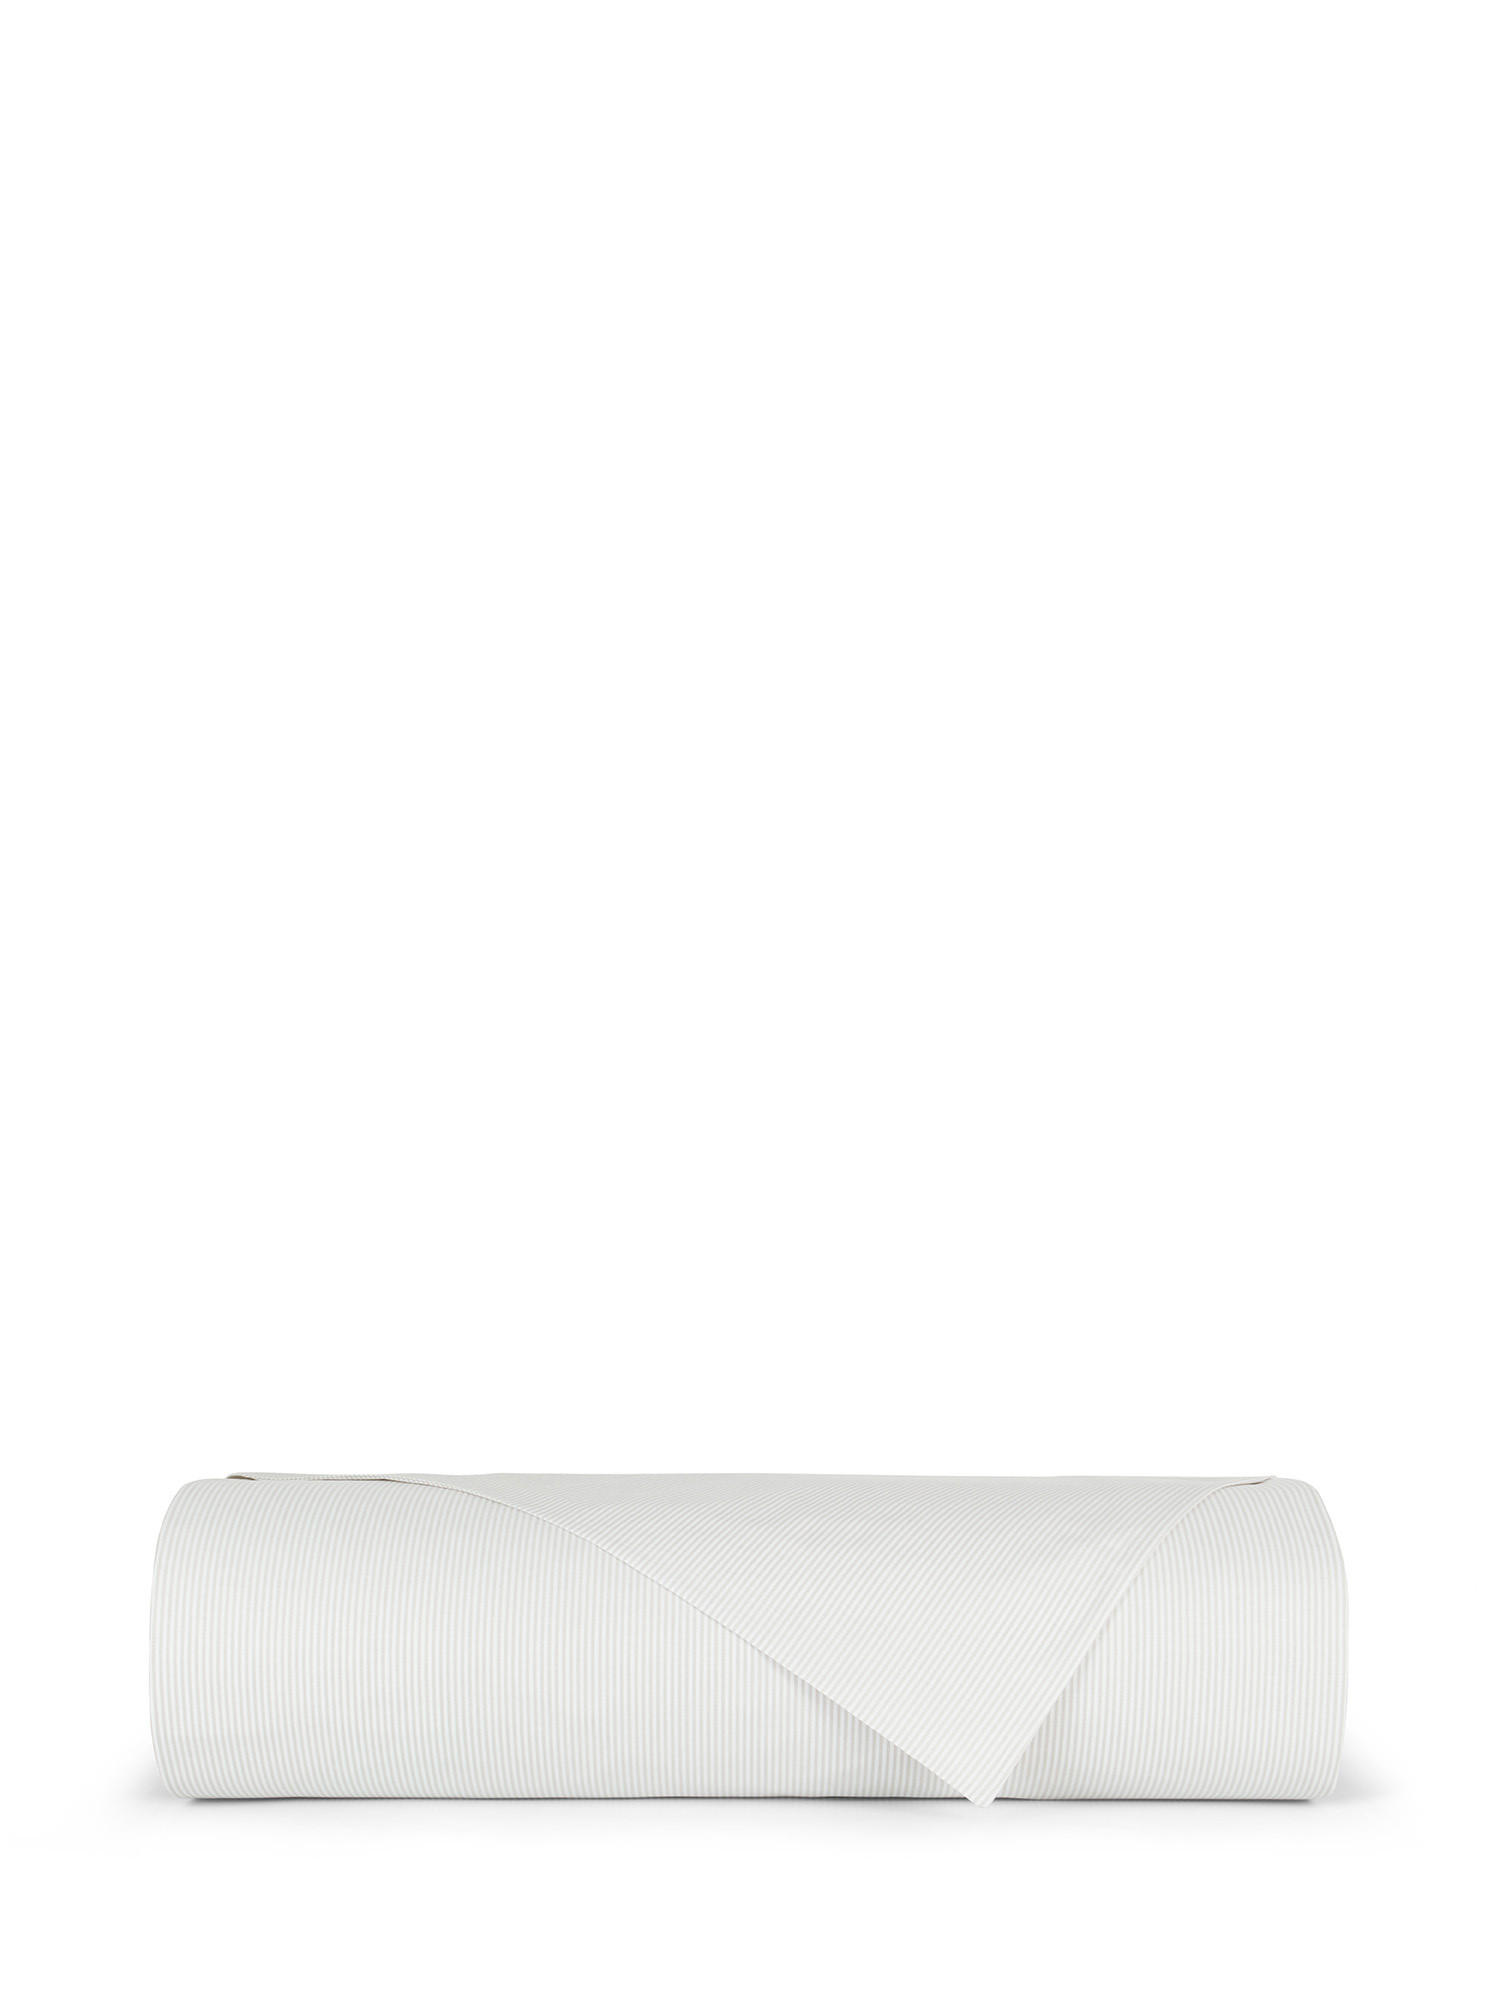 Duvet cover in fine cotton percale Portofino, White, large image number 1